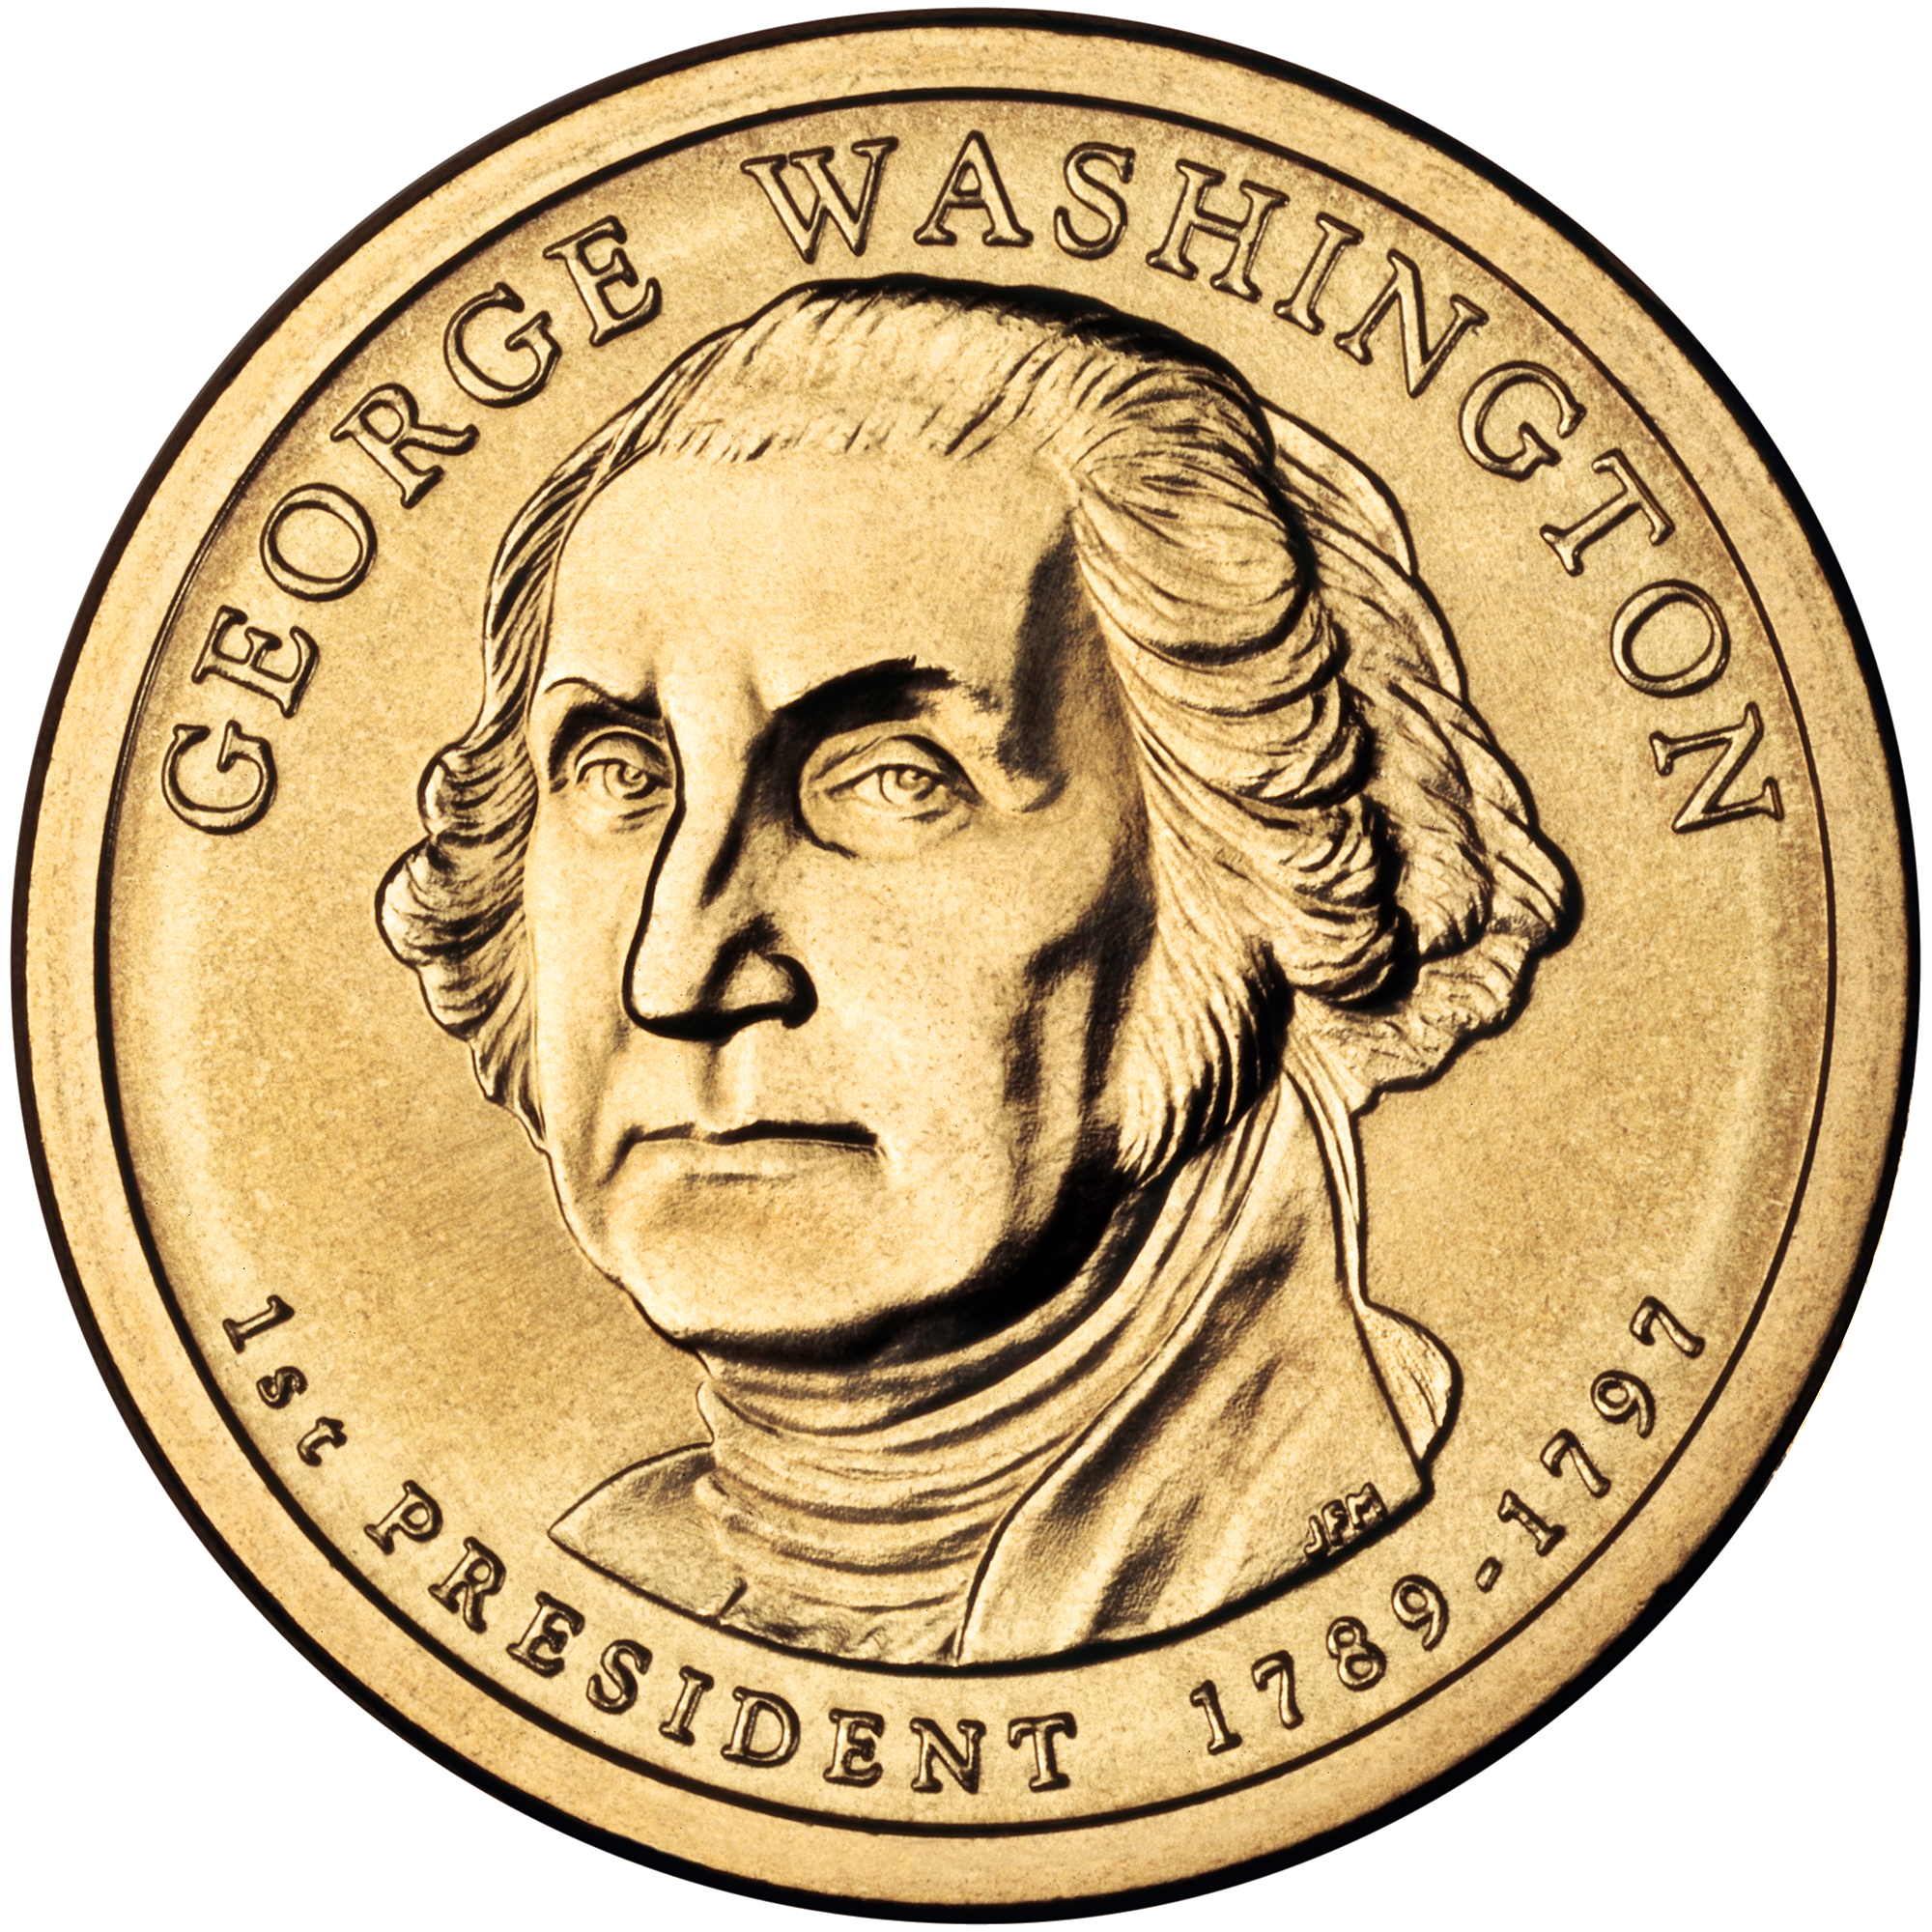 Presidential dollar coins - Wikipedia